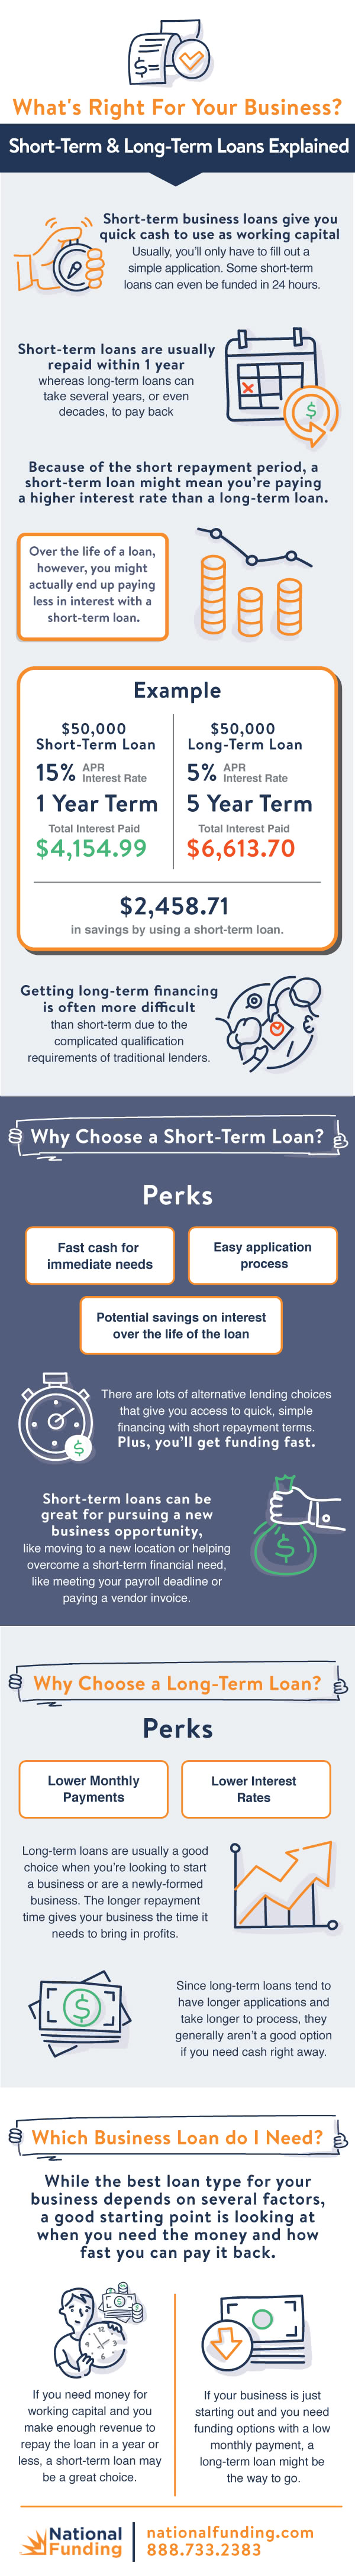 long-term vs. short-term business loans infographic